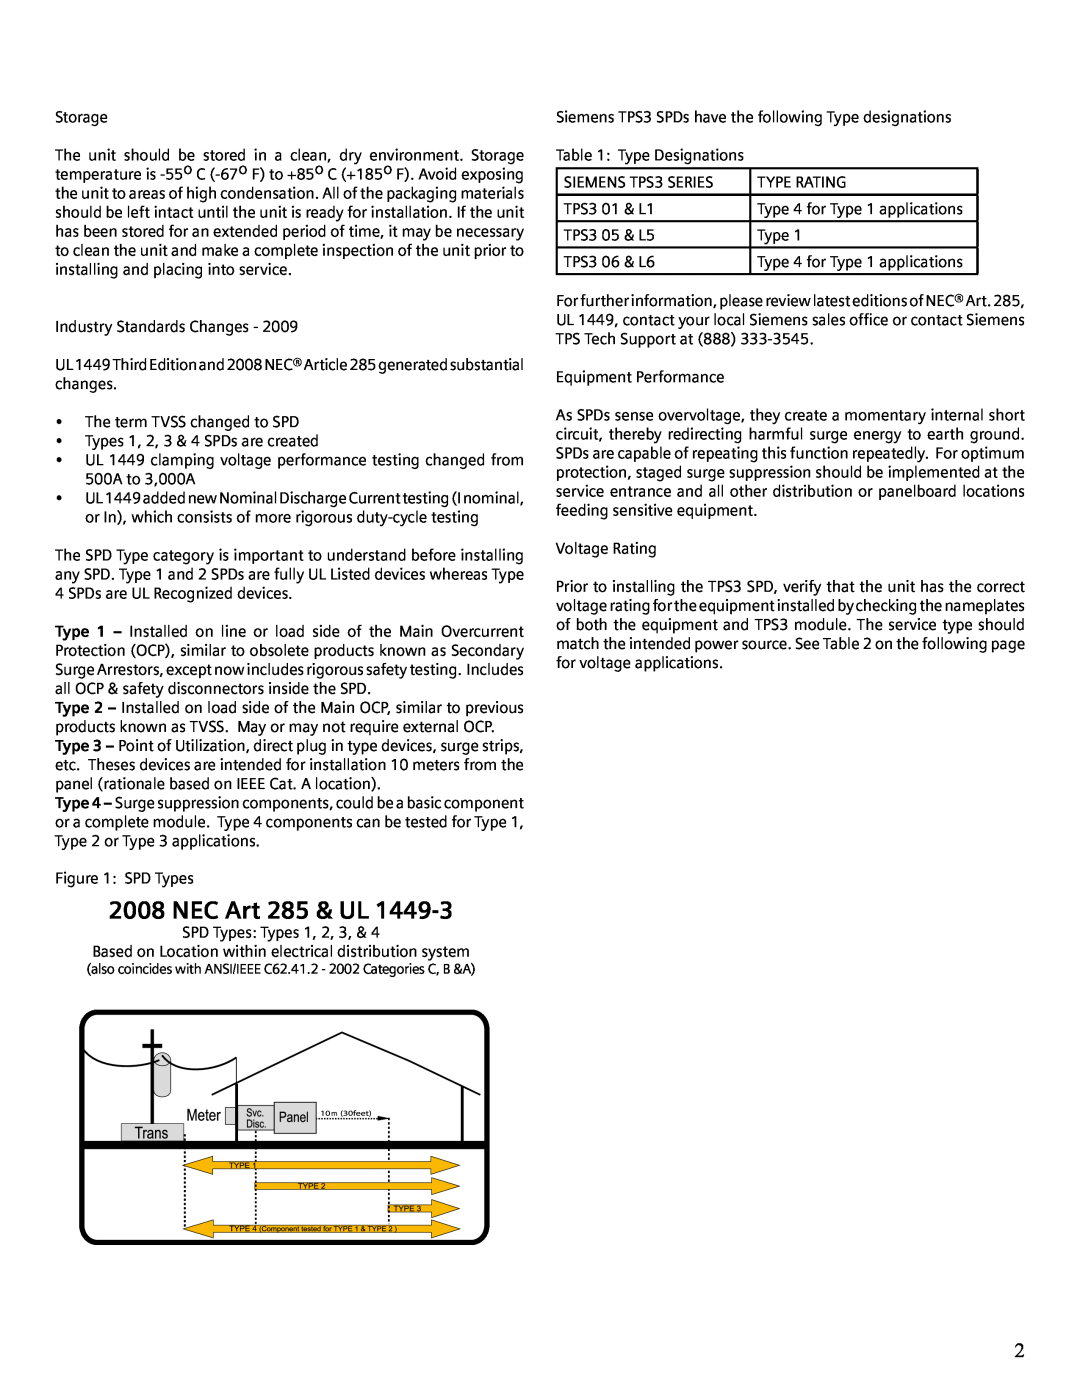 Siemens TPS3 user manual NEC Art 285 & UL 